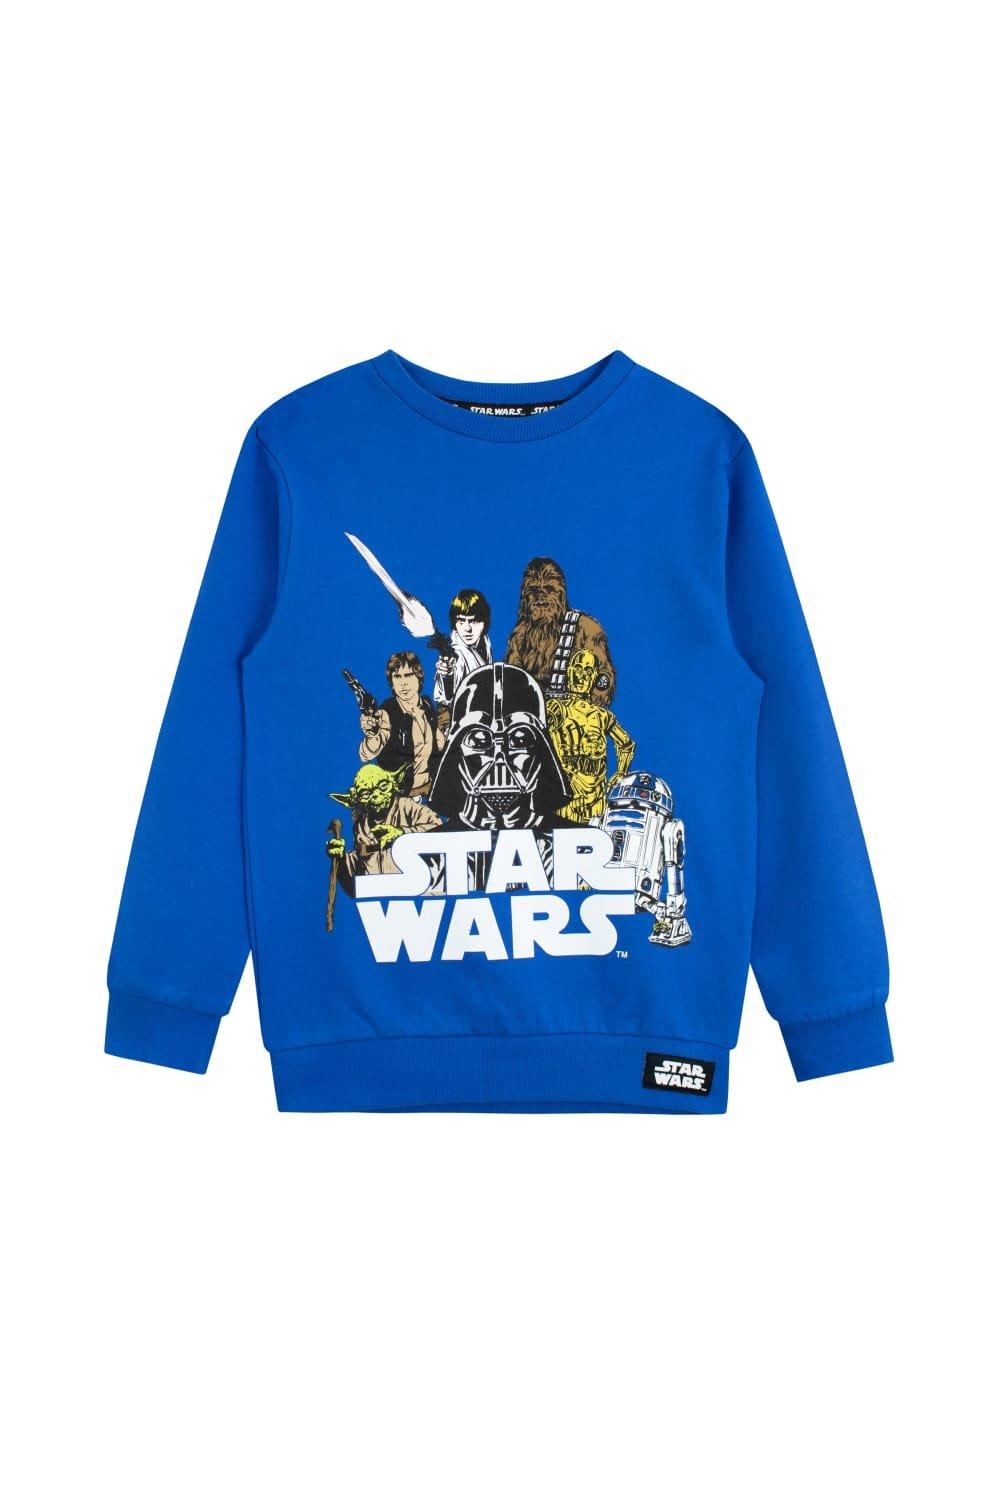 Darth Vader Yoda Chewbacca and R2D2 Sweatshirt